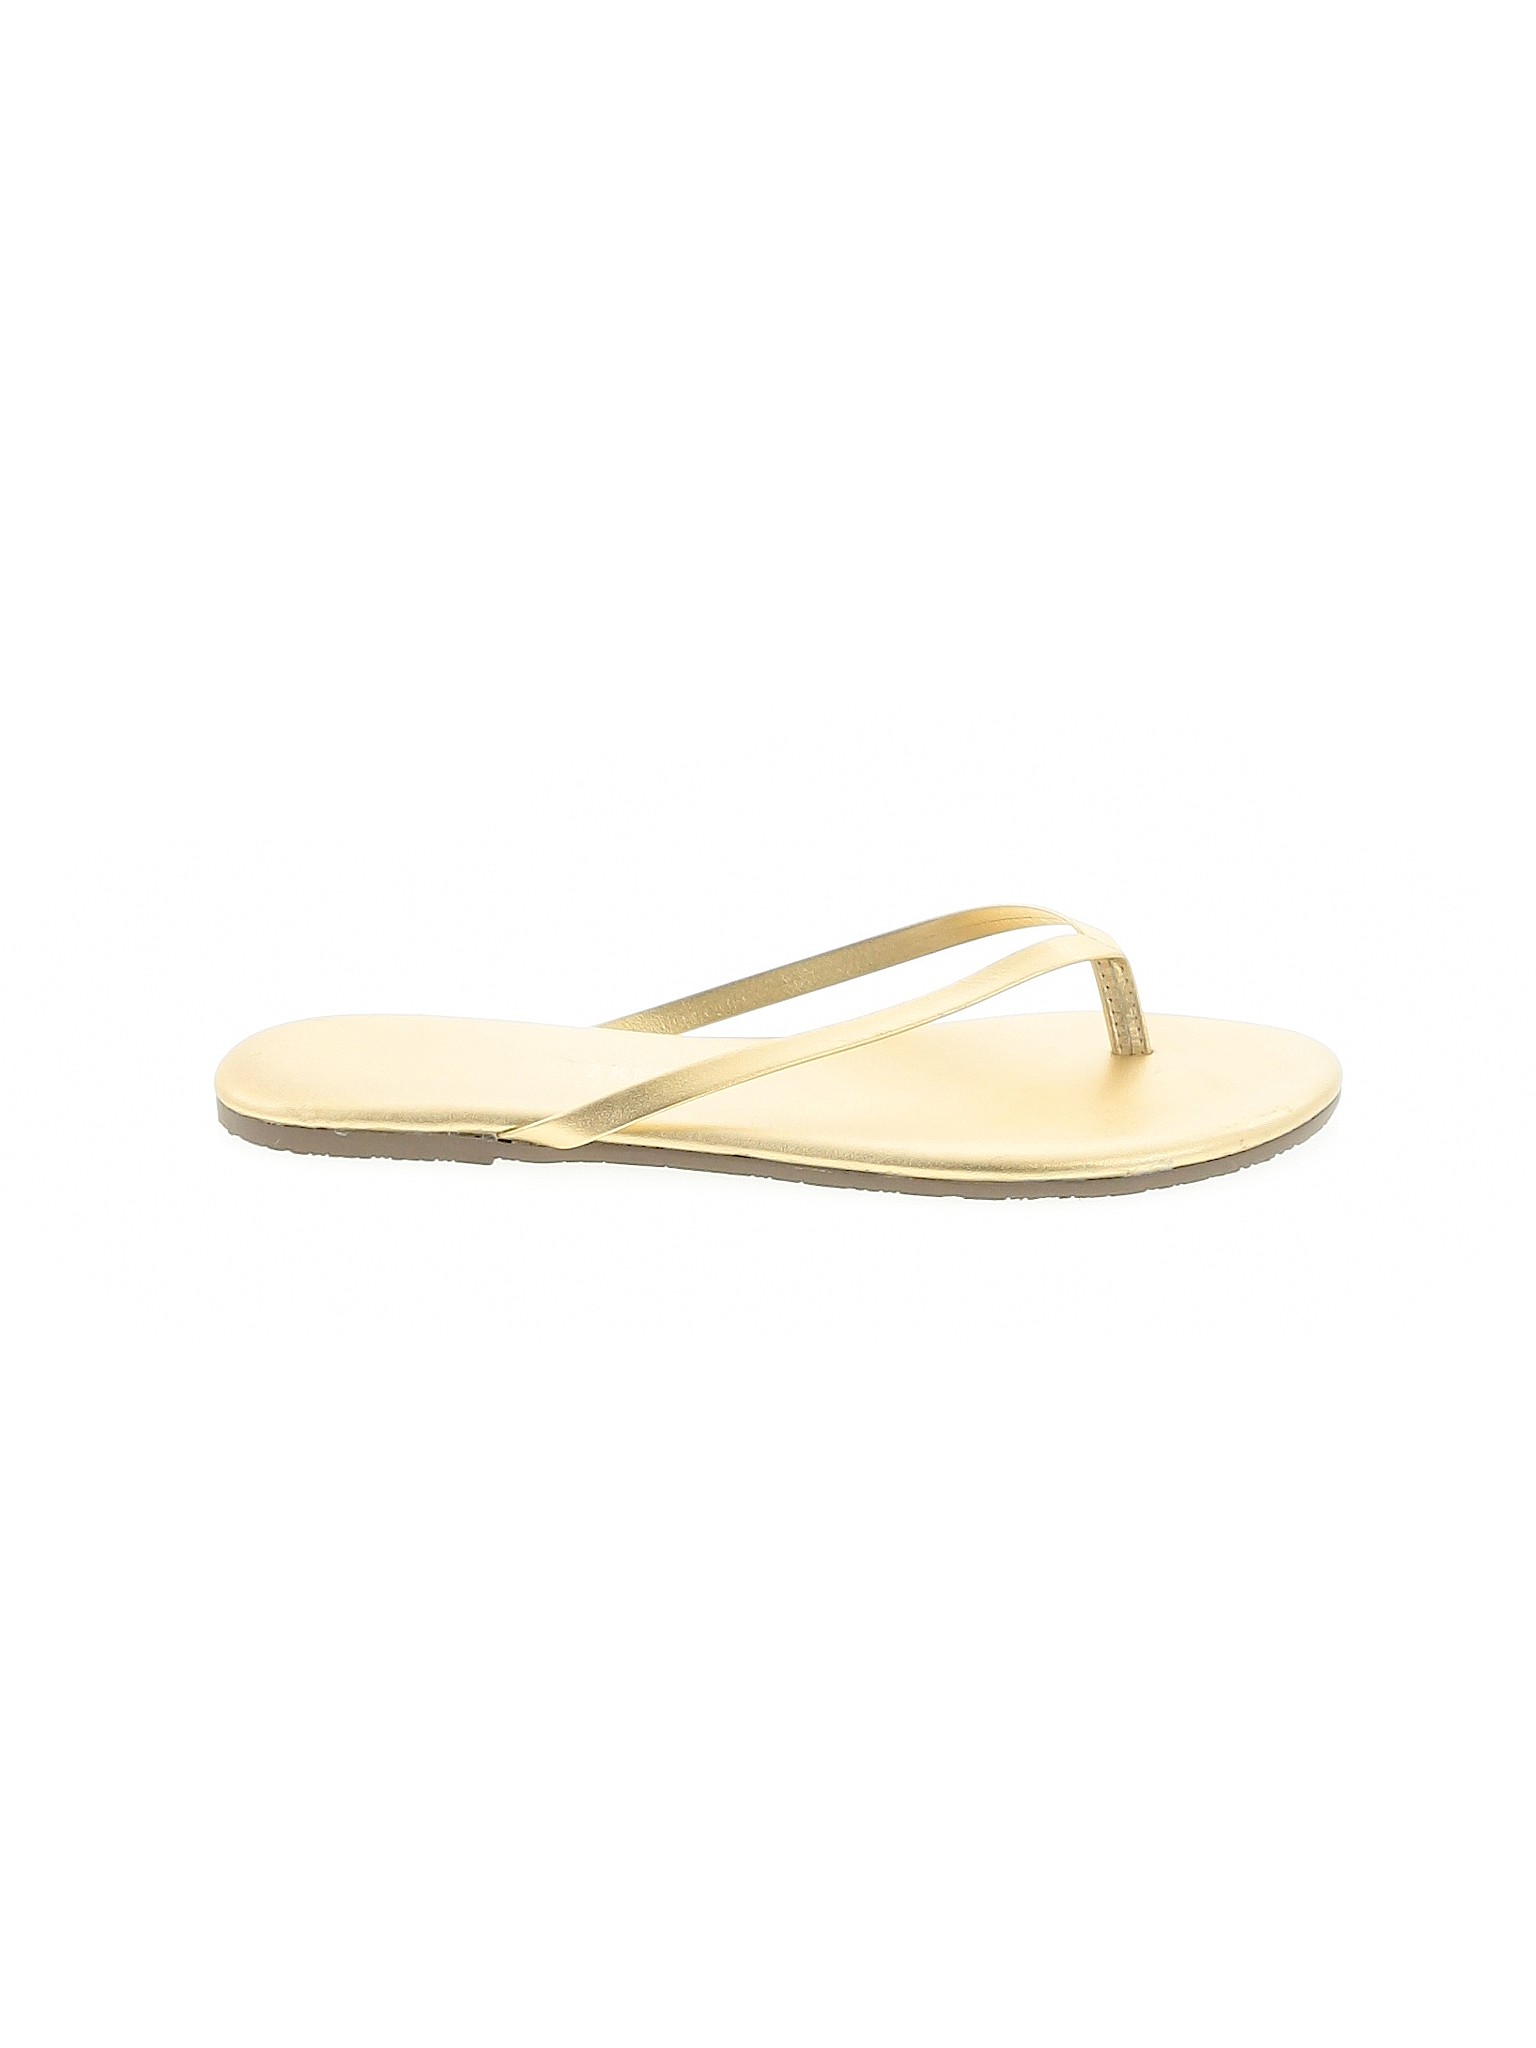 Tkees Women Gold Flip Flops US 7 | eBay